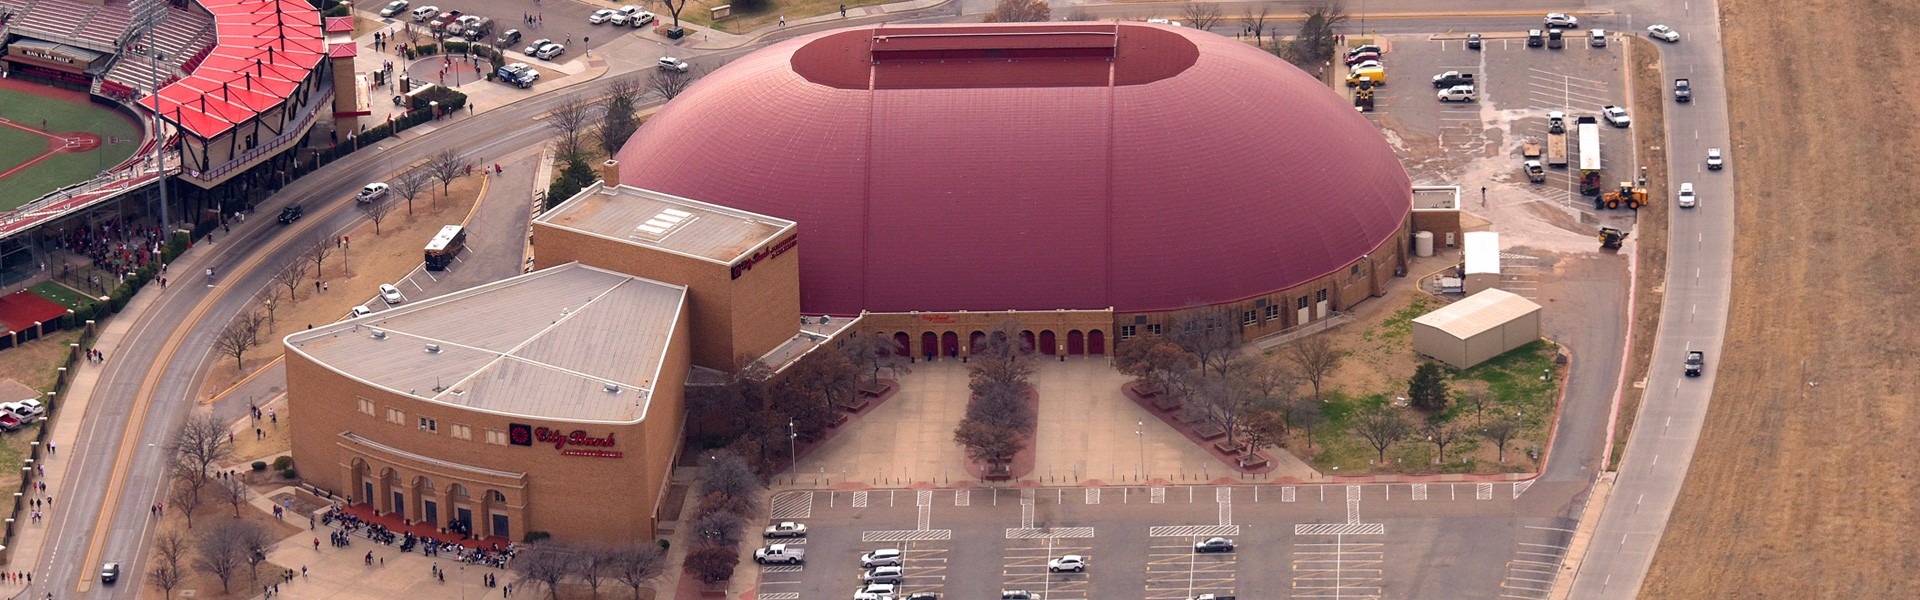 Lubbock Coliseum – Lubbock, TX